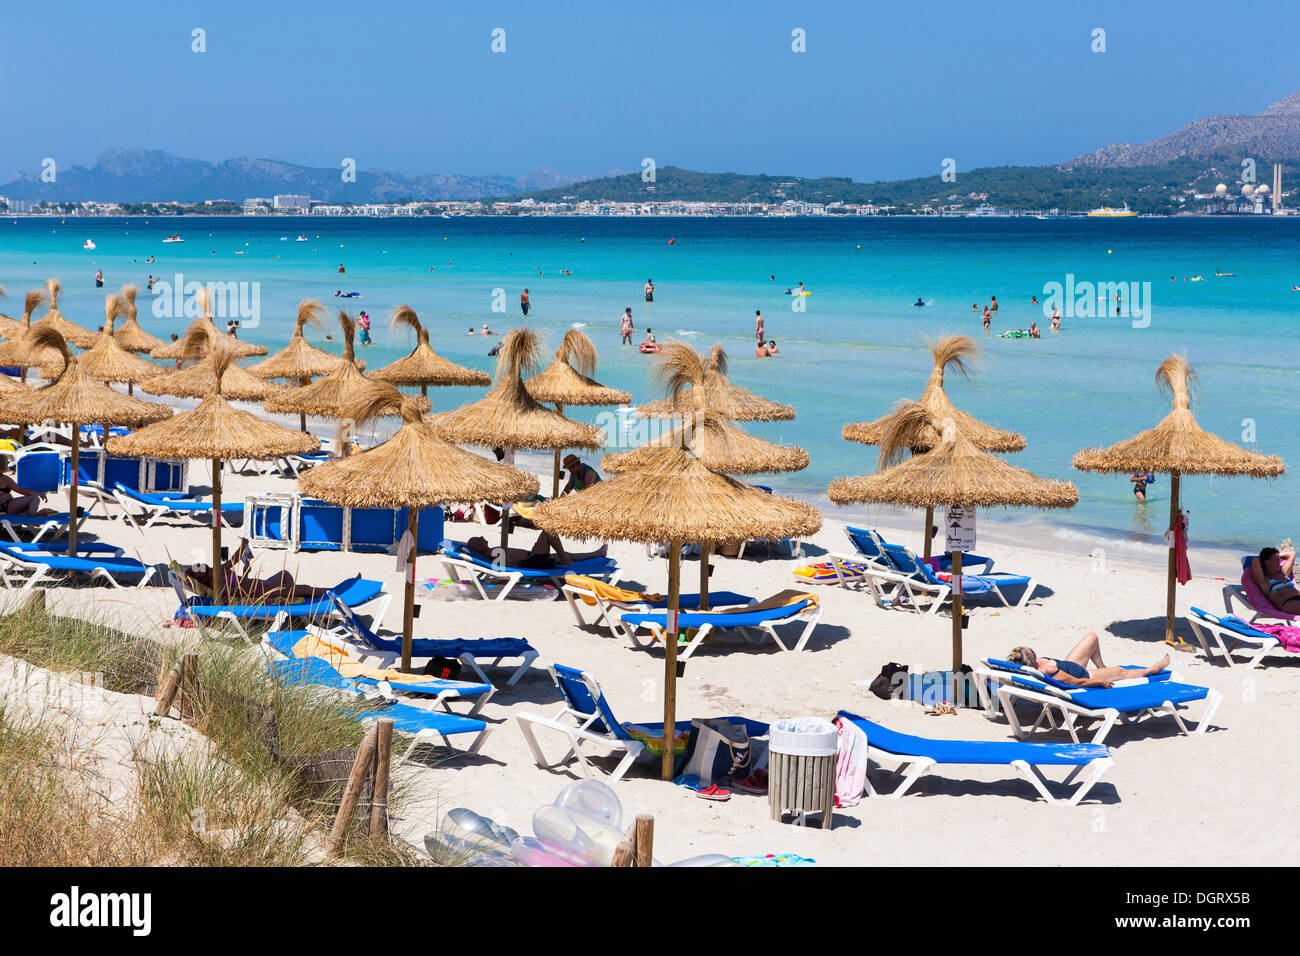 Crowded beach, tourists on a sandy beach, Playa de Muro, Bon Aire Ses Fotges, Majorca, Balearic Islands, Spain Stock Photo